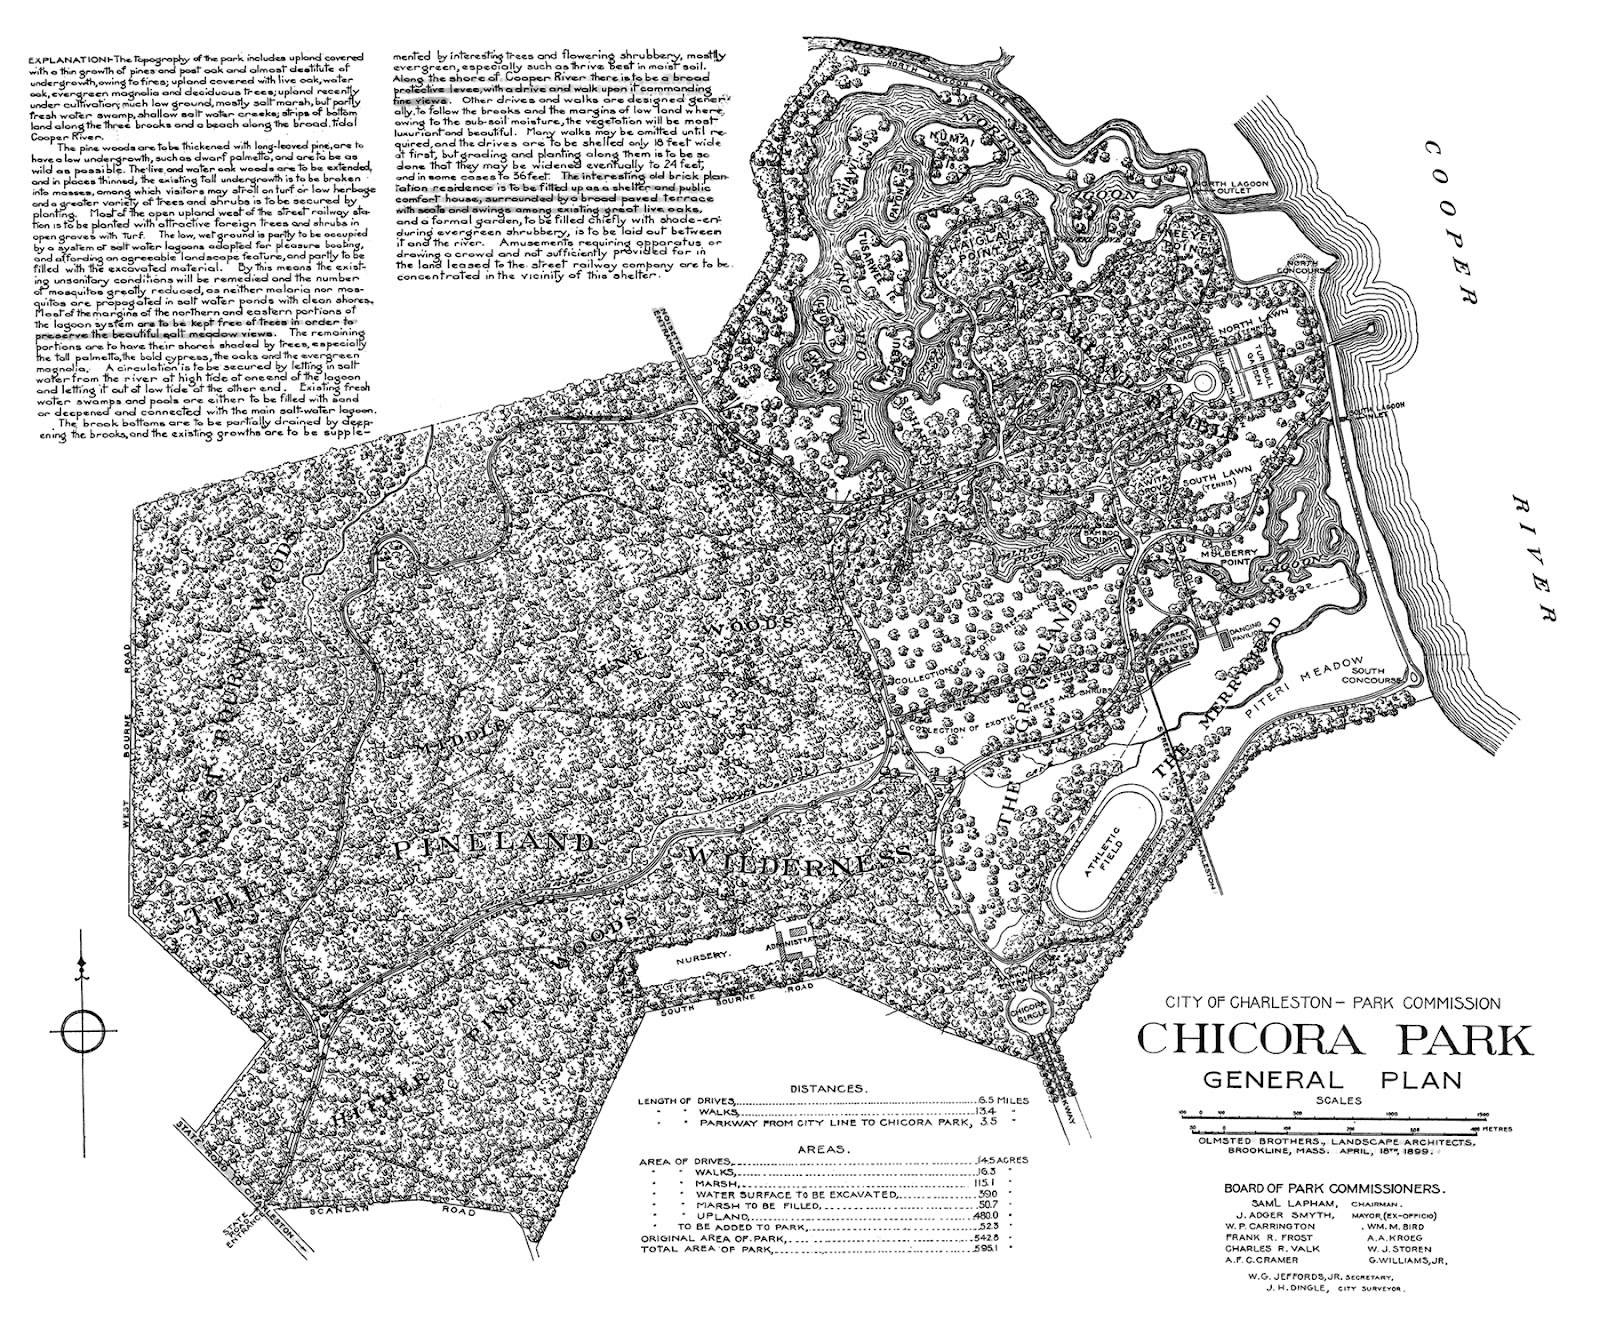 Chicora Park